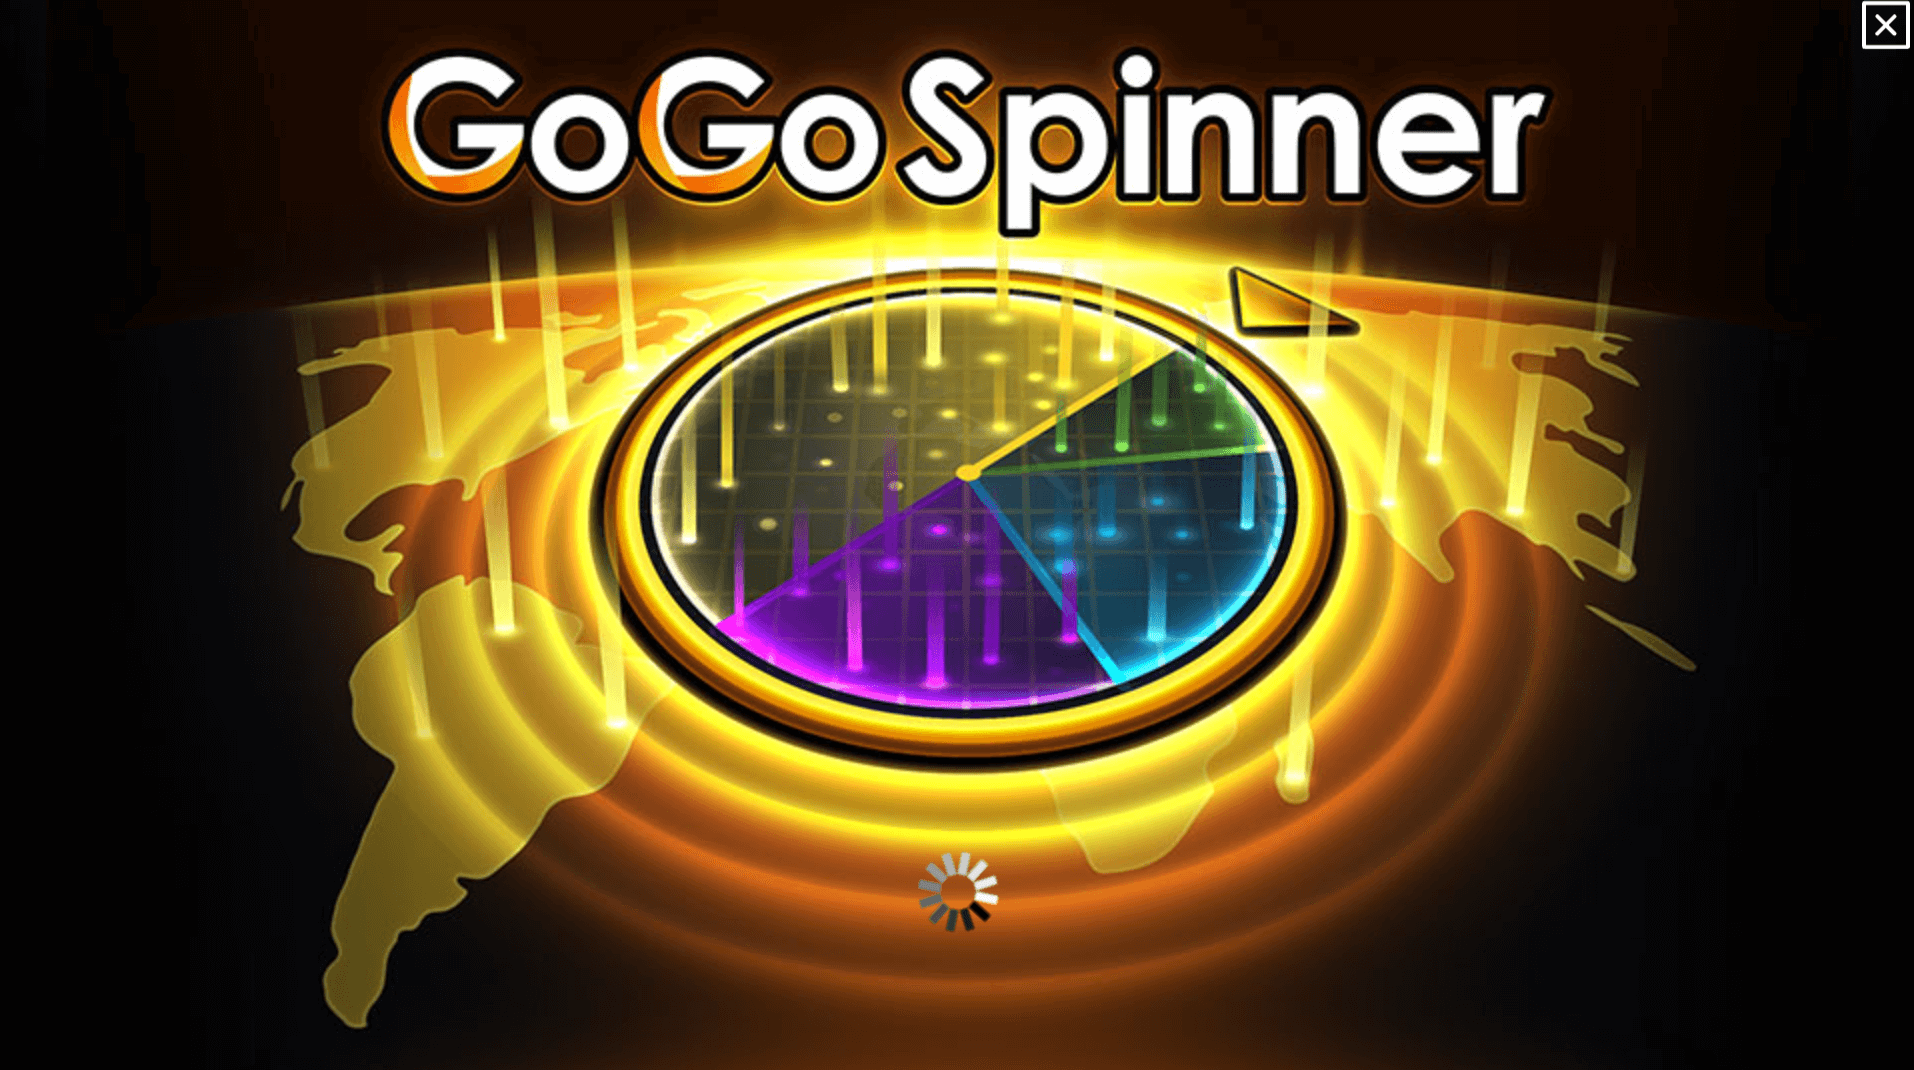 Go Go Spinner proceso de juego